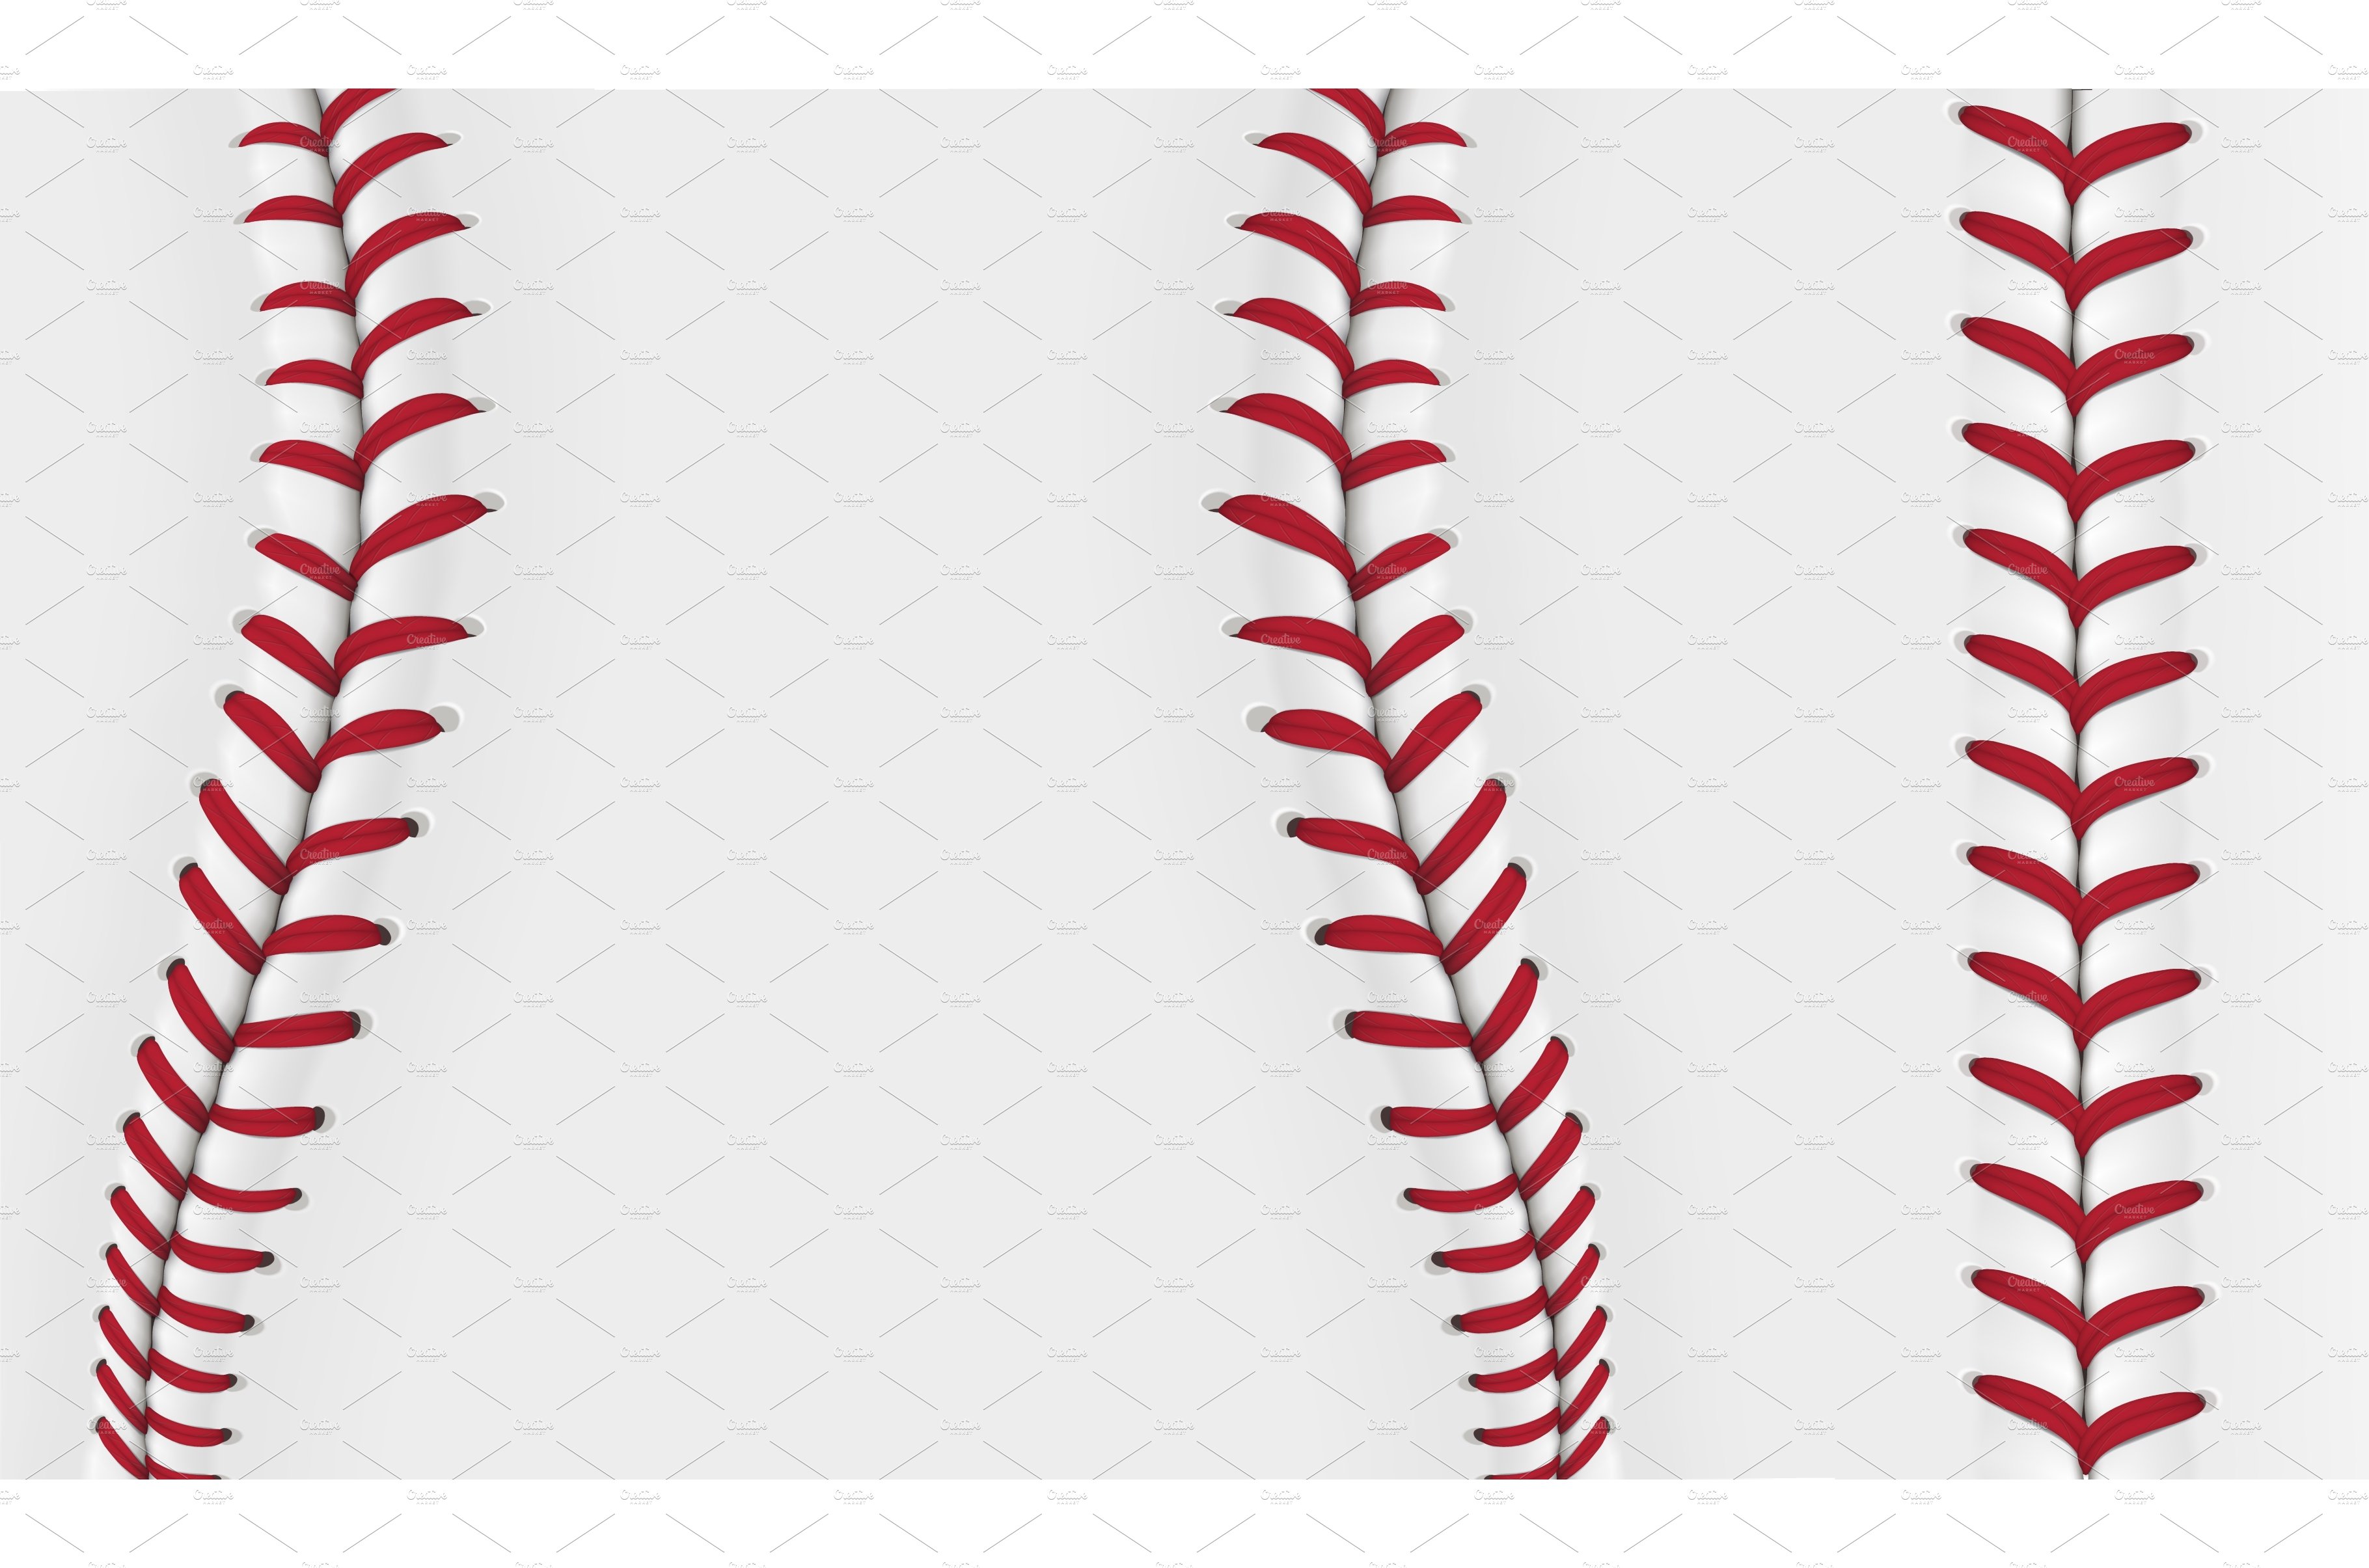 Baseball lace pattern, stitch thread cover image.